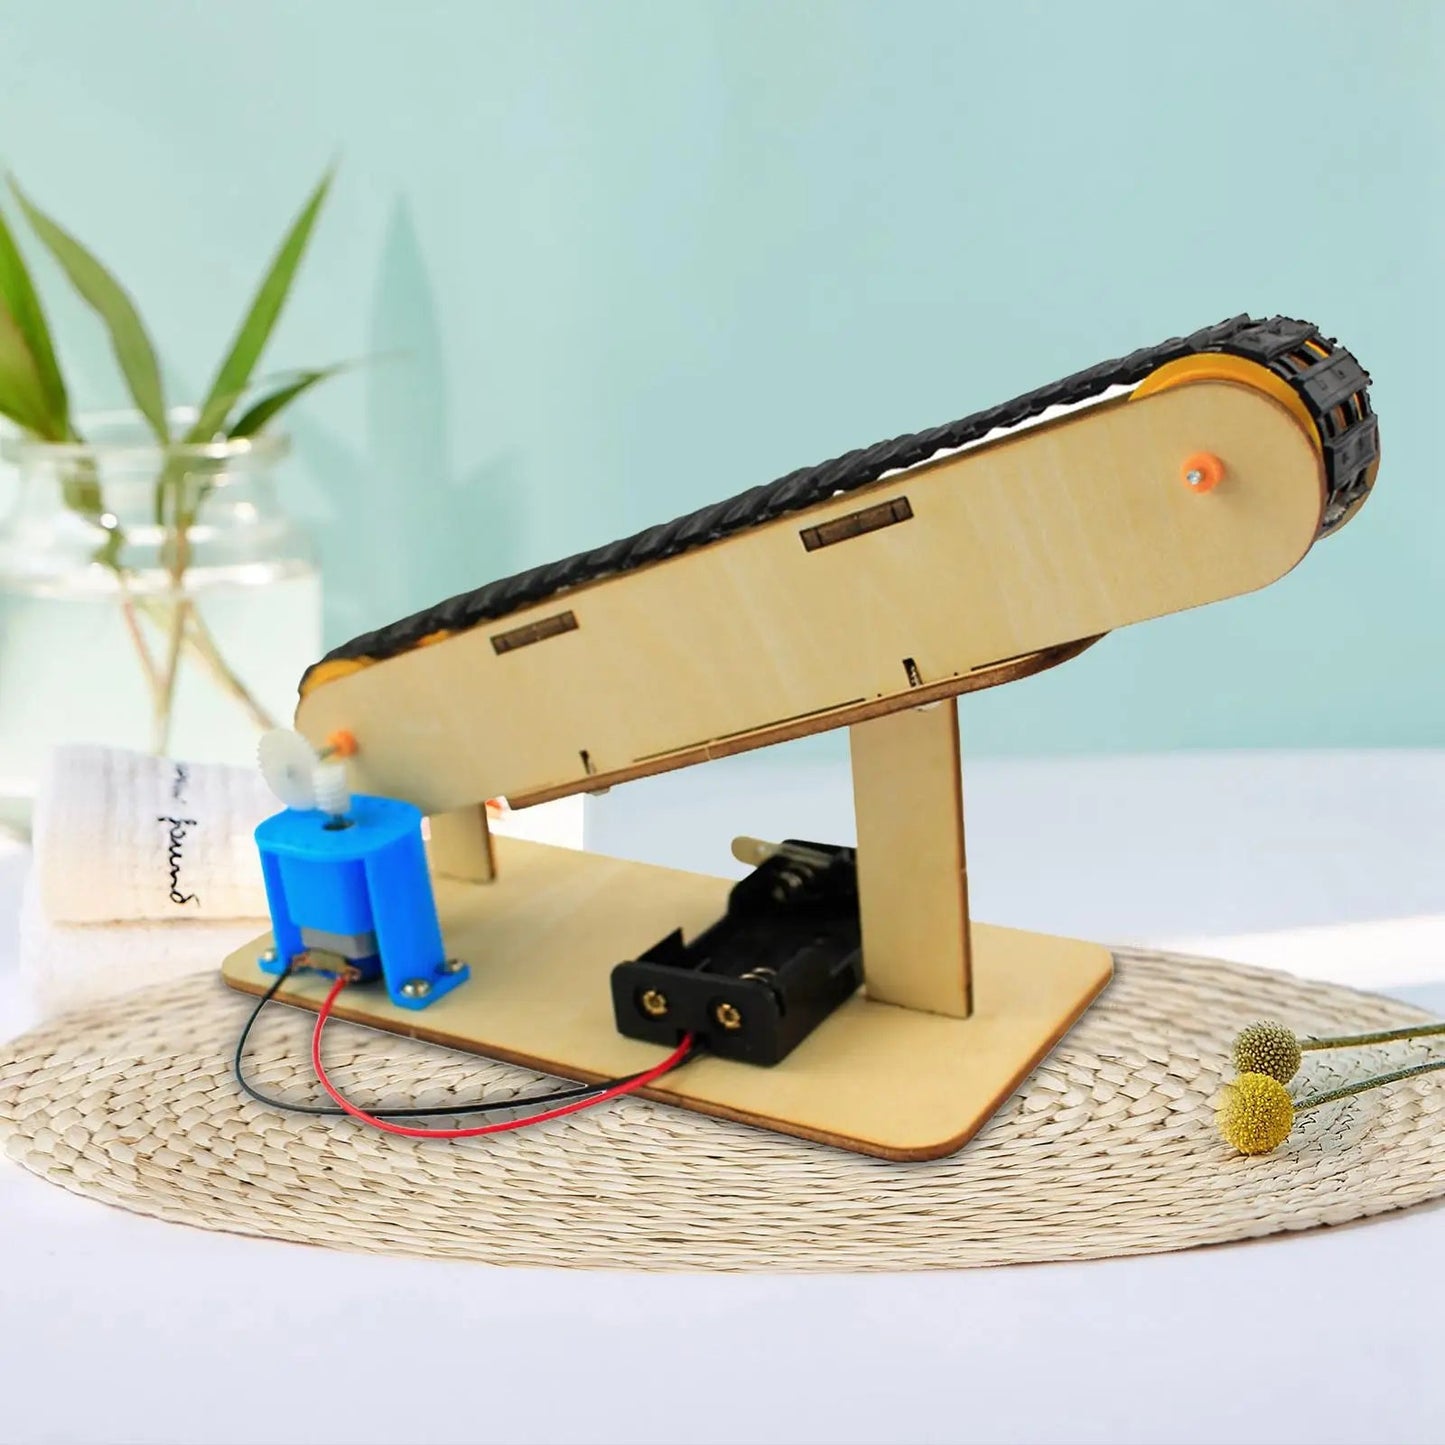 Intelligent Science Experiment Conveyor Belt DIY Toy Kit